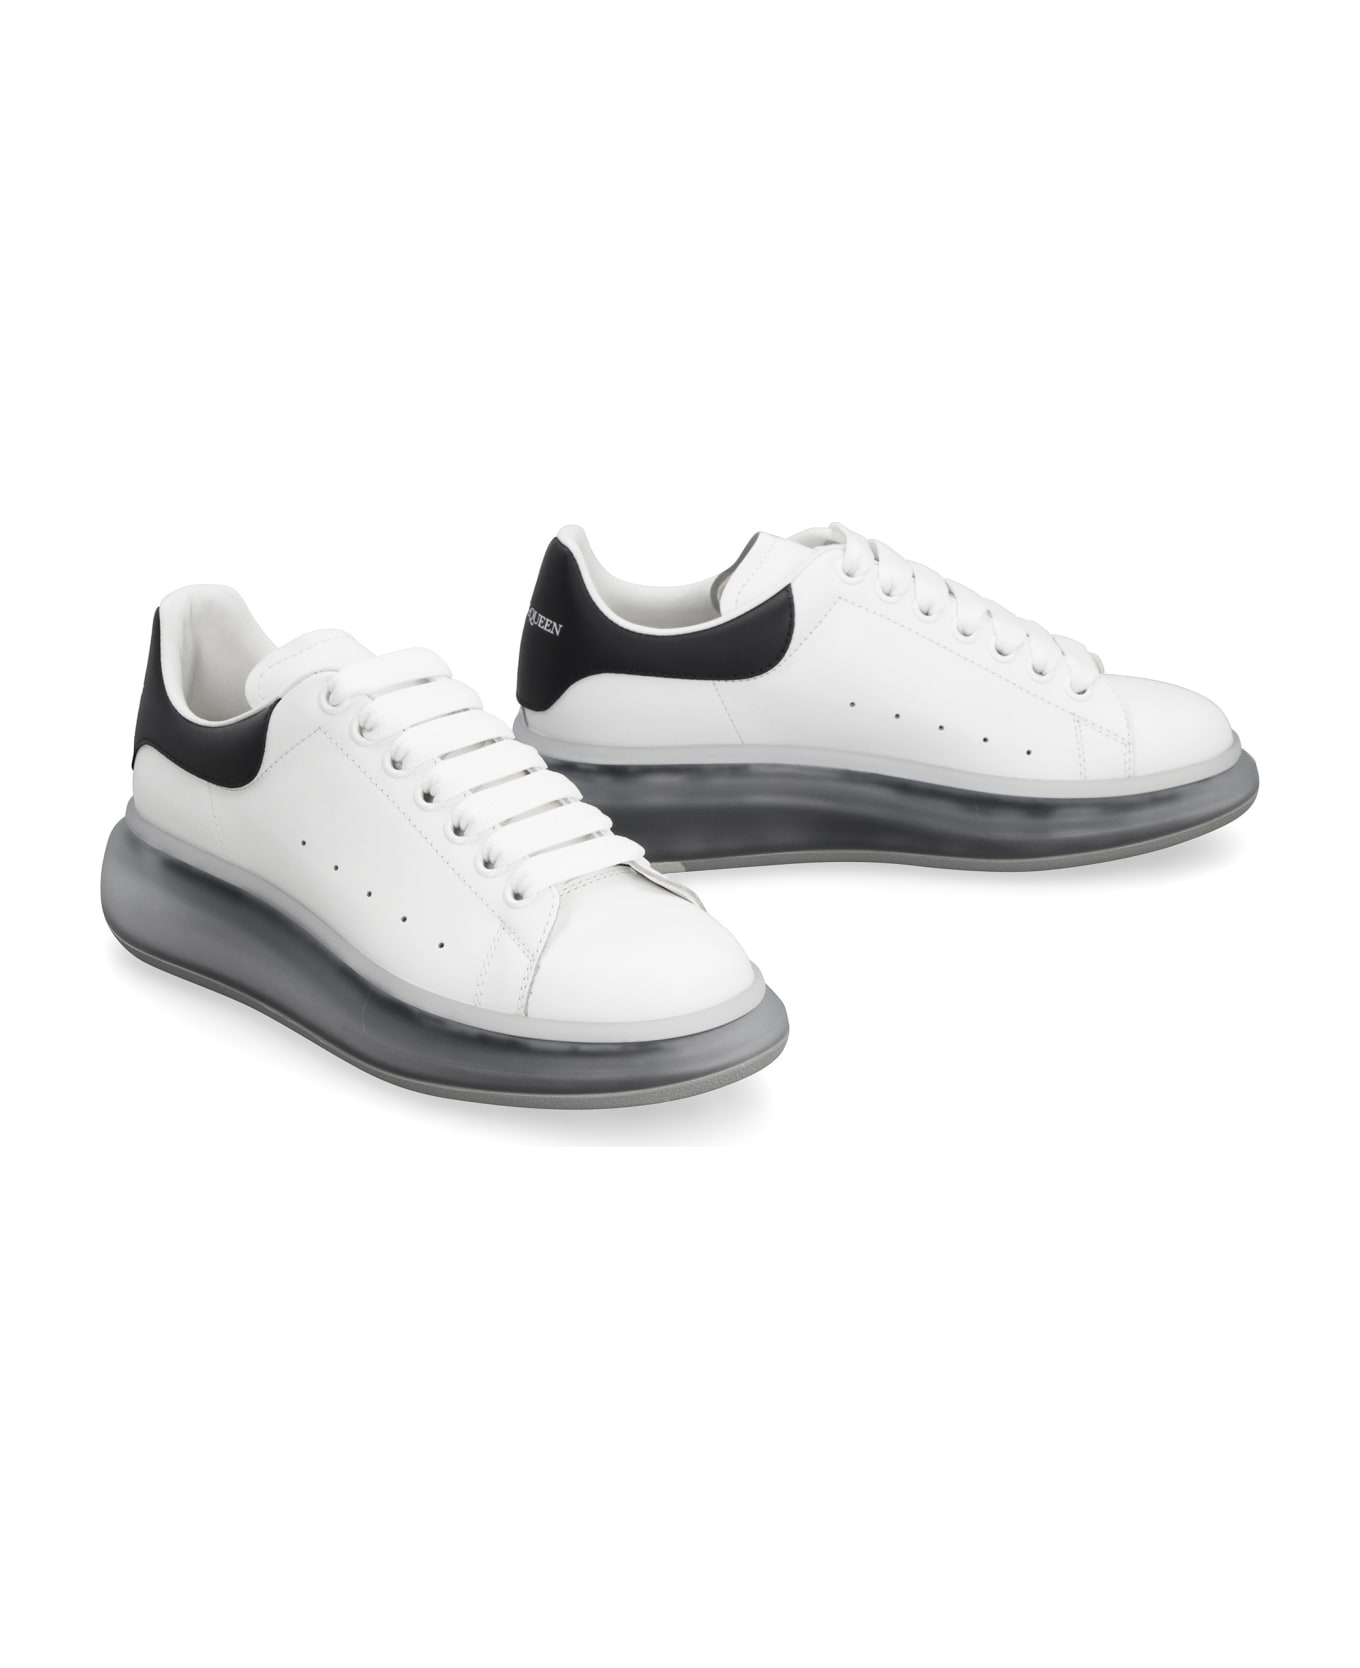 Alexander McQueen Larry Leather Sneakers - White Navy Navy スニーカー